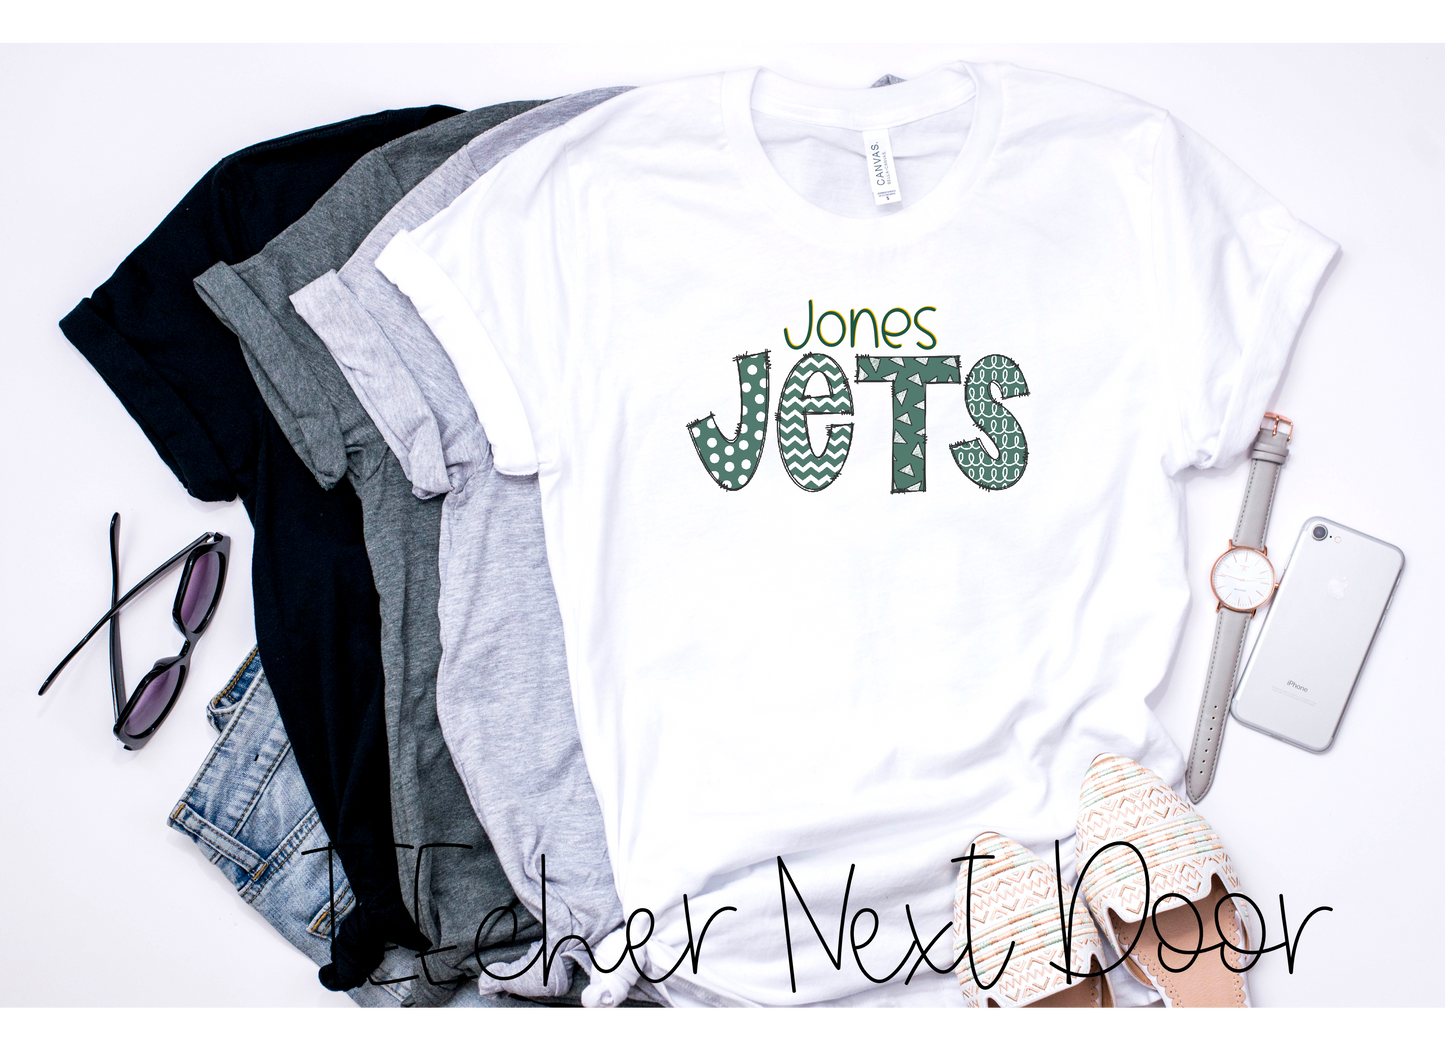 Jones Jets Plaid Mascot